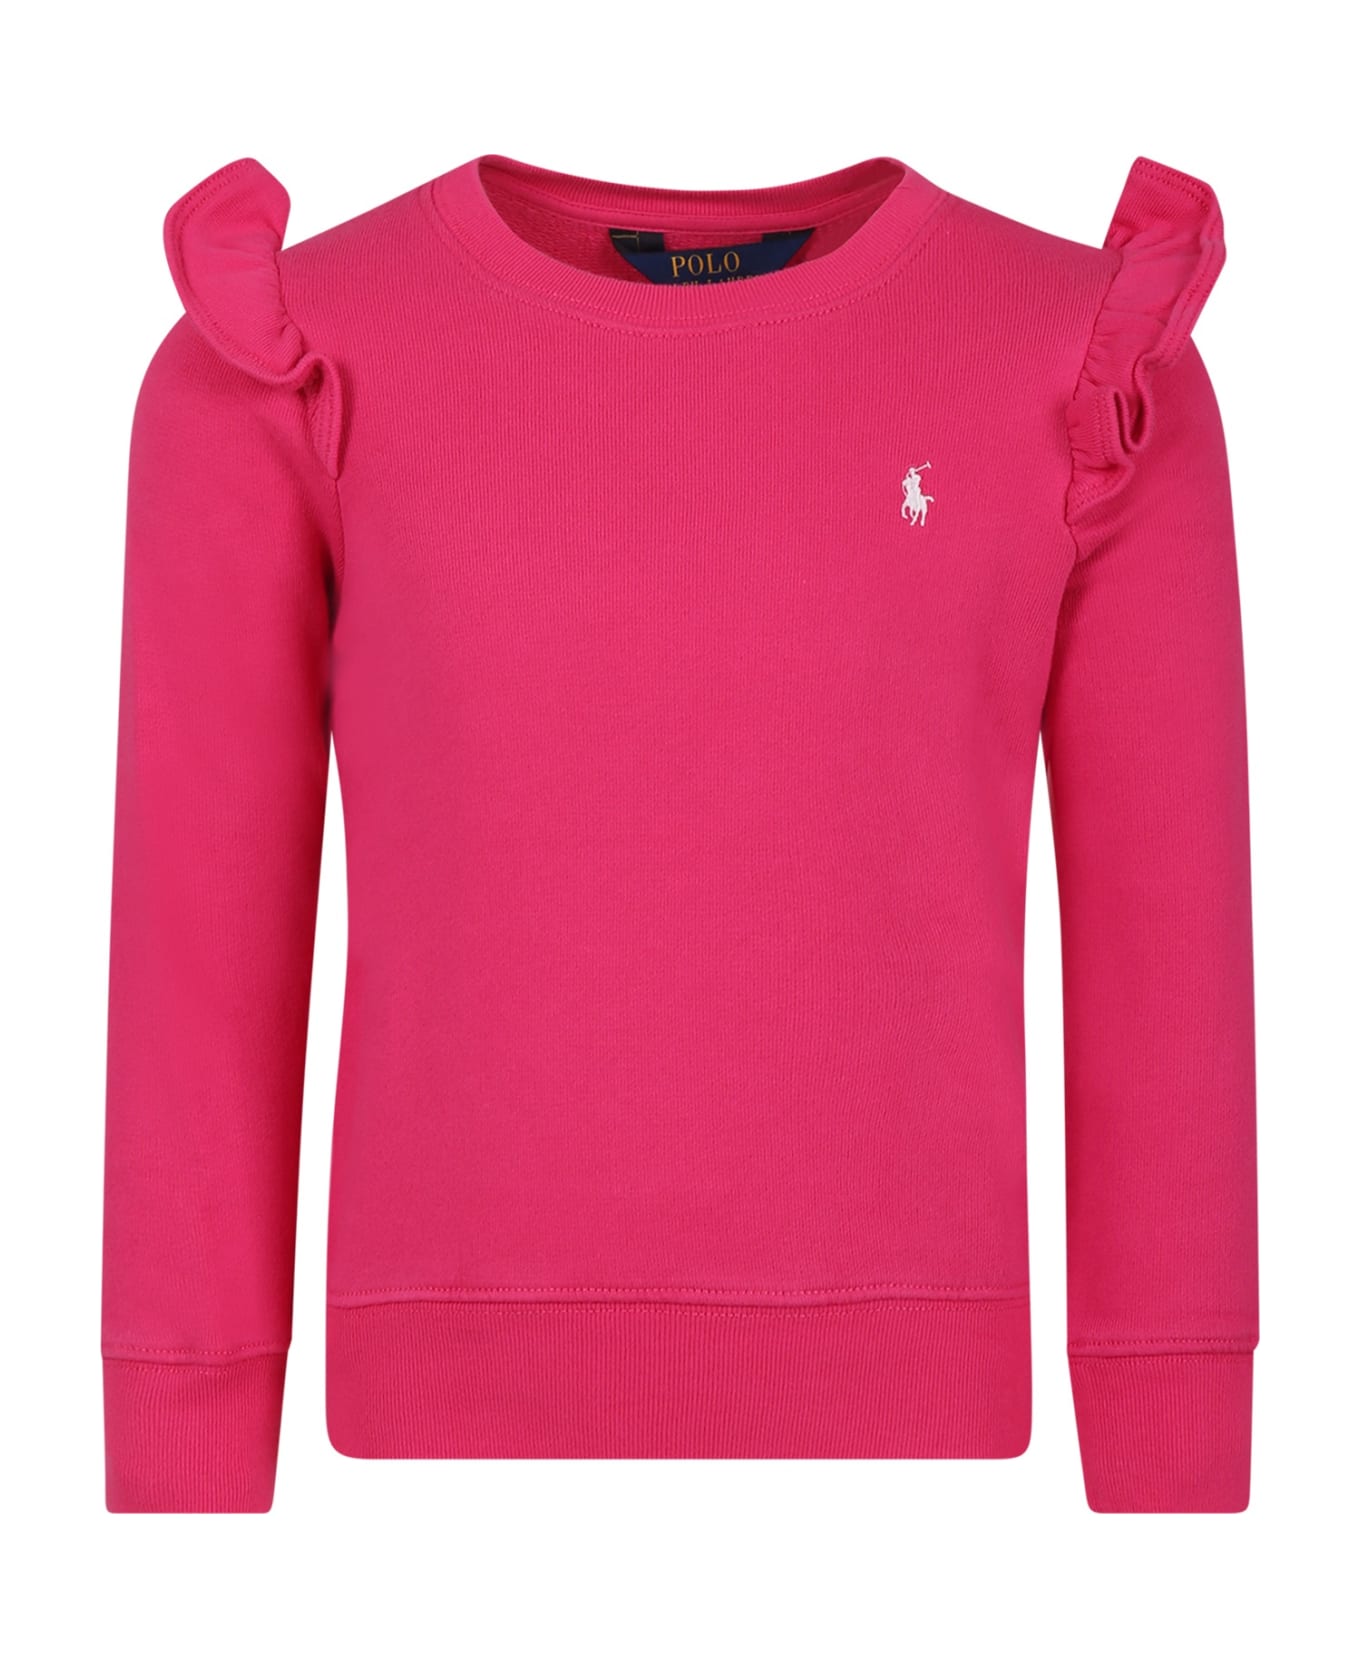 Ralph Lauren Fuchsia Sweatshirt For Girl With Pony - Fuchsia